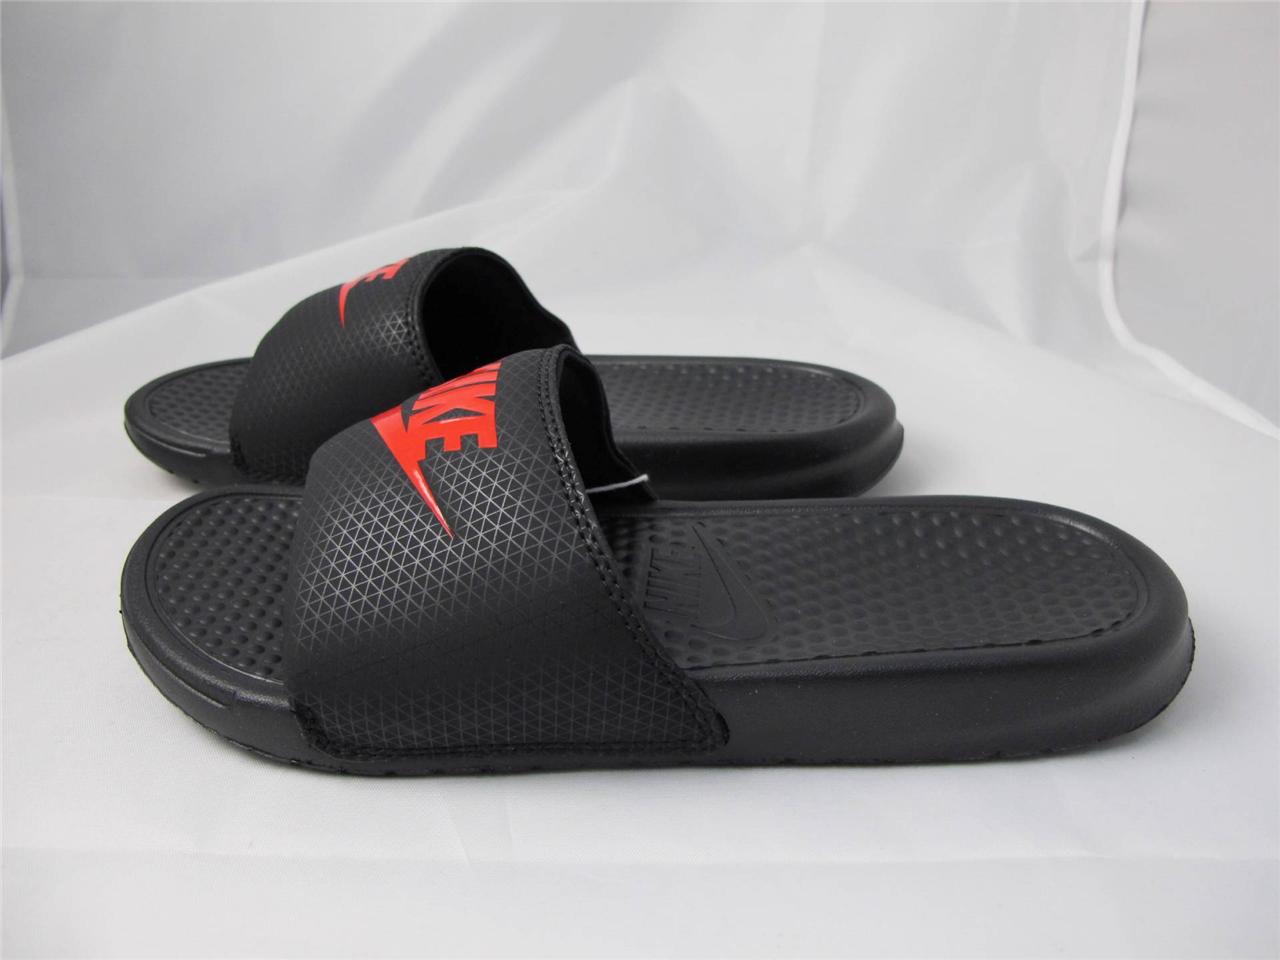 Nike Benassi JDI Men's Sandals Black/Challenge Red 343880-060 | eBay